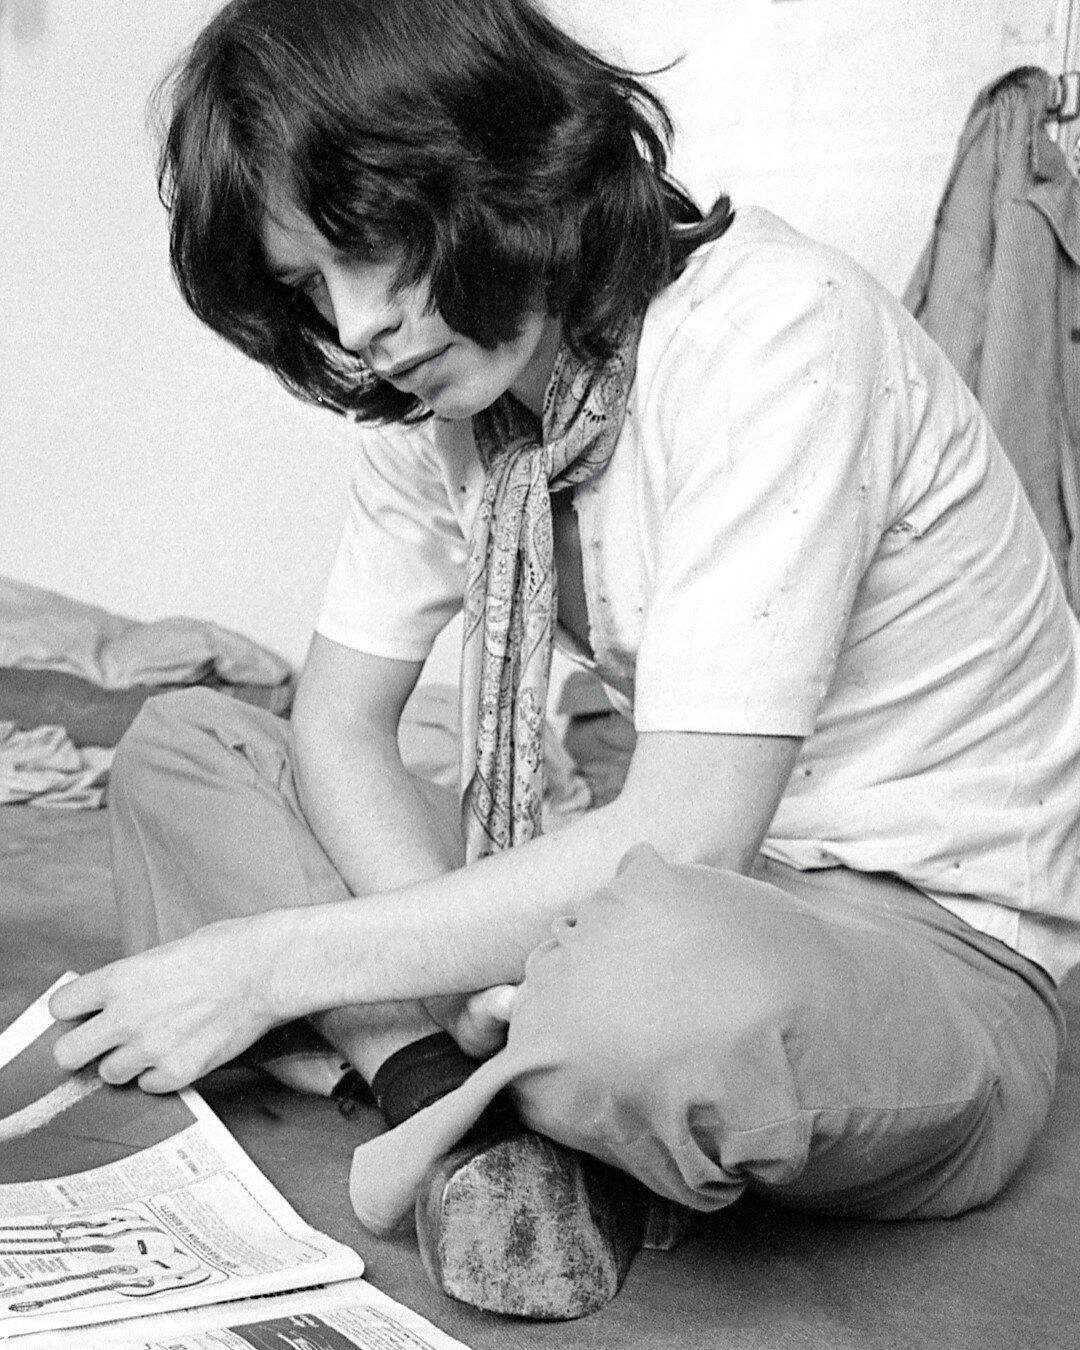 Mick Jagger, reading the classifieds - London, 1968
.
.
.
.
.
#mickjagger #london #1968 #bwportrait #sixtiesstyle #vintagefashion #blackwhiteportrait #bwphotography #kodakblack #nikon #1960s #classifieds #newspaper #vintagestyle #vintagehair #rocknro